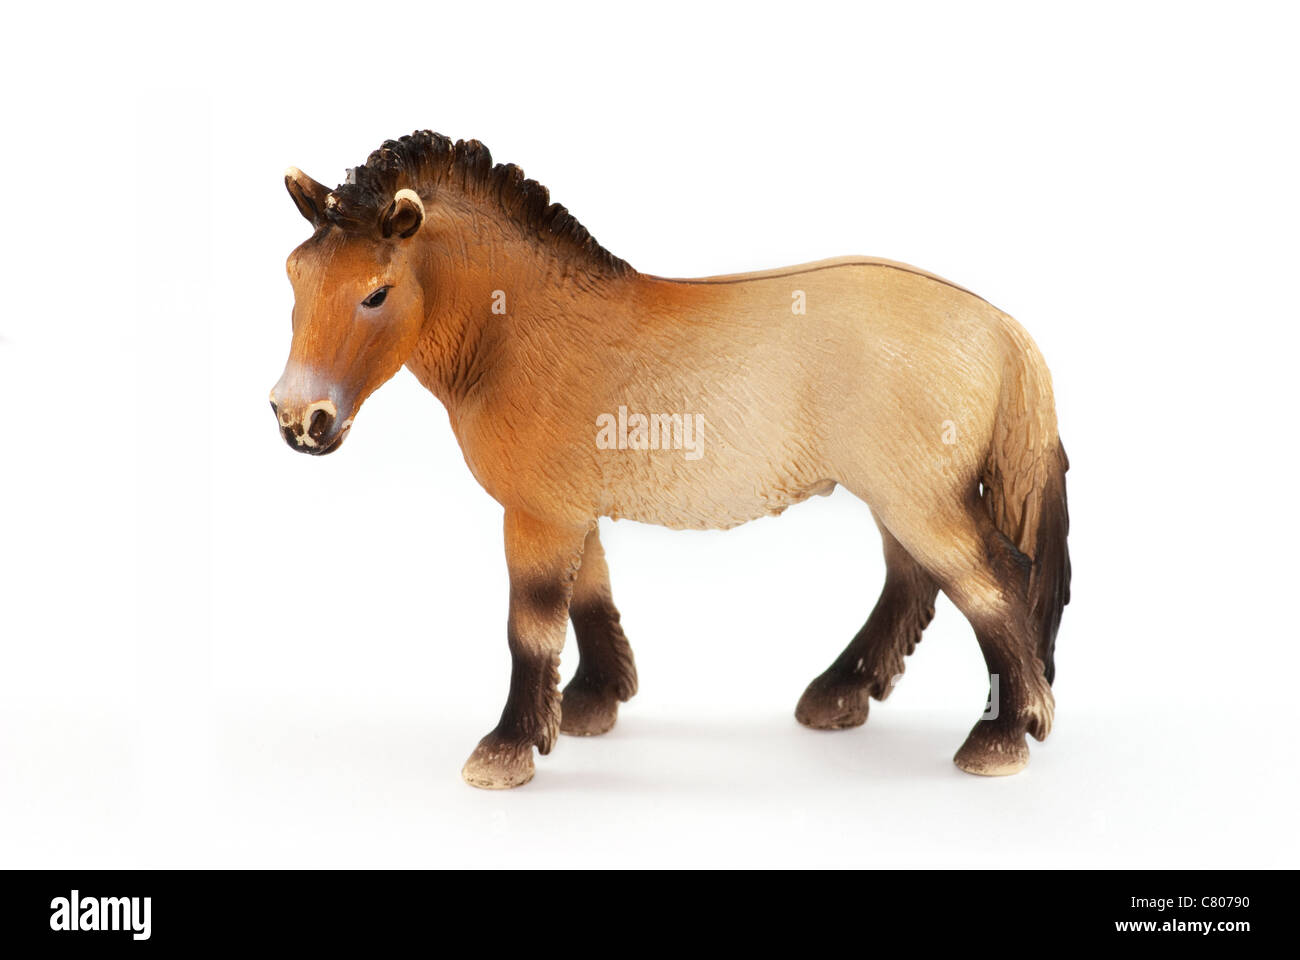 Horse toy on white background Stock Photo